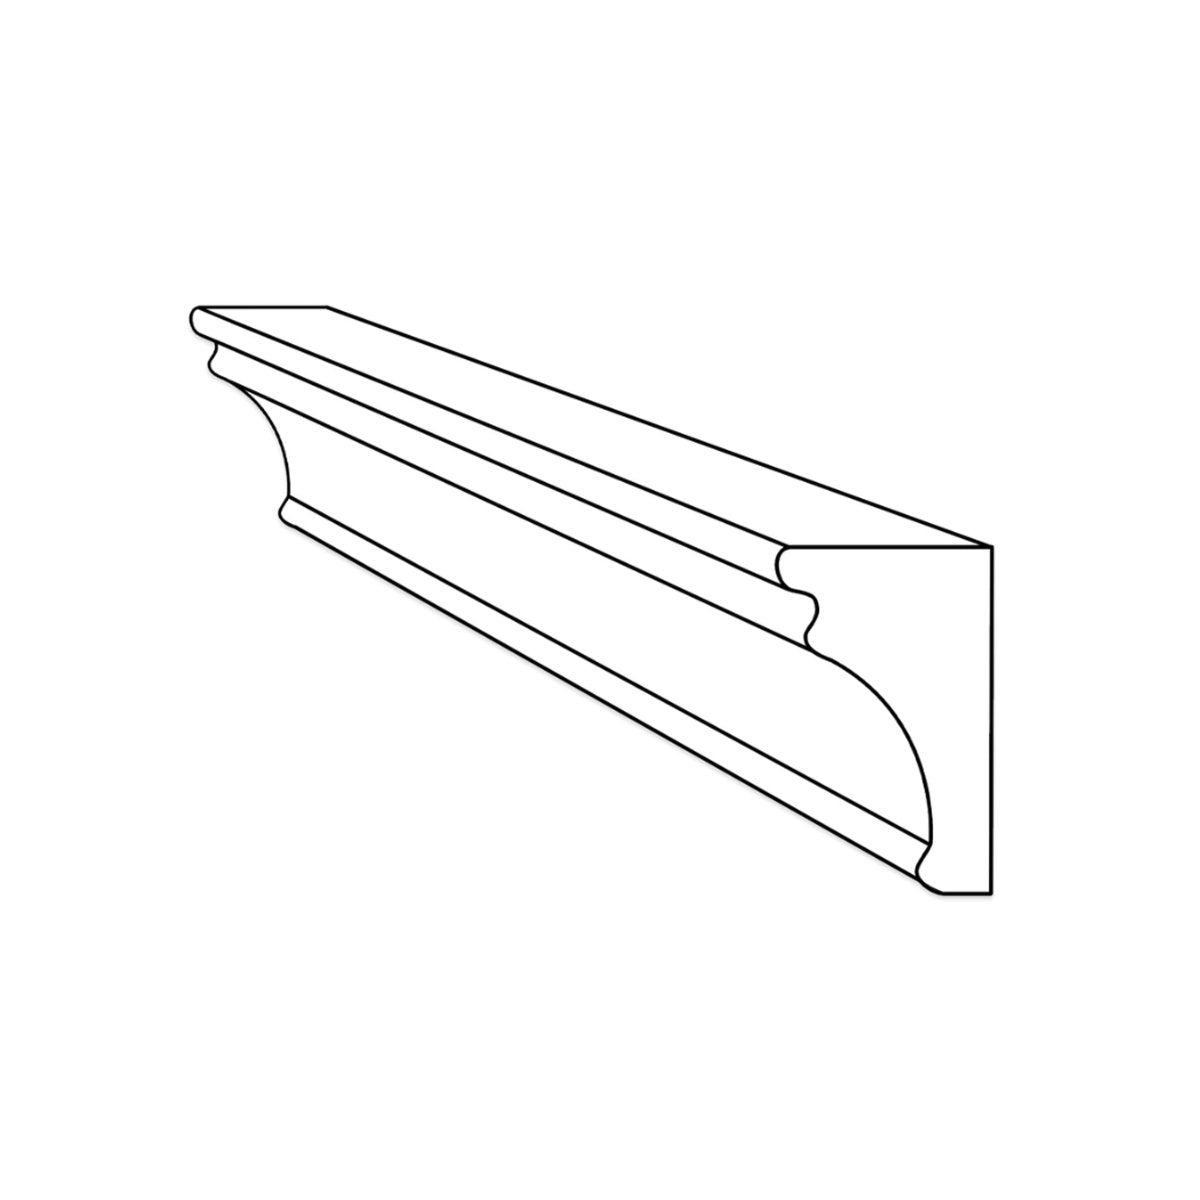 Bianco Carrara Chairrail 2''x12'' Stone Molding Honed